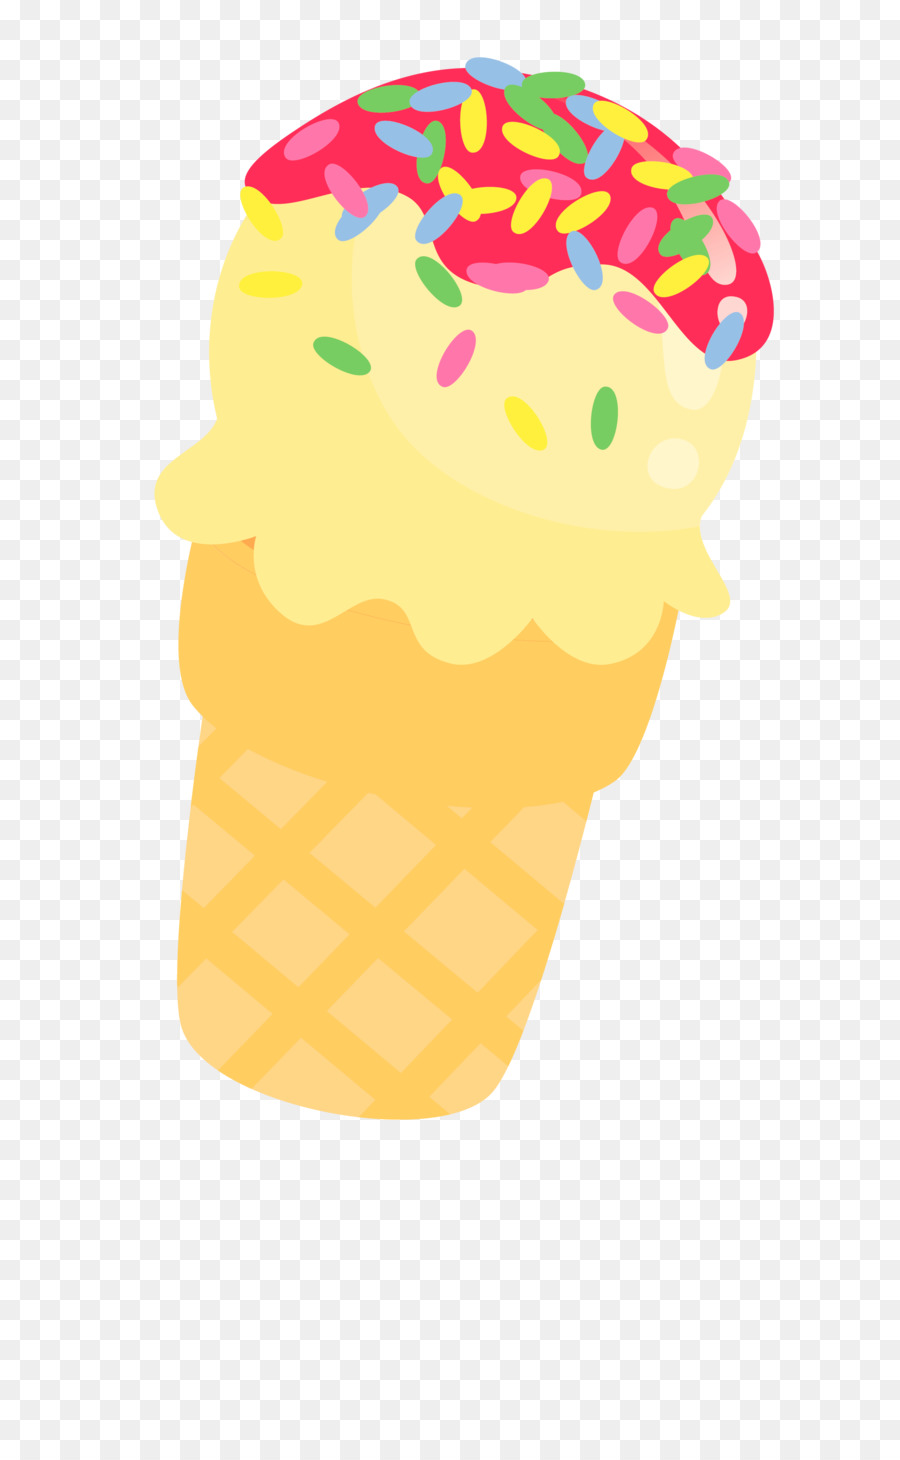 Free Ice Cream Clipart Transparent Background, Download Free Ice Cream ...